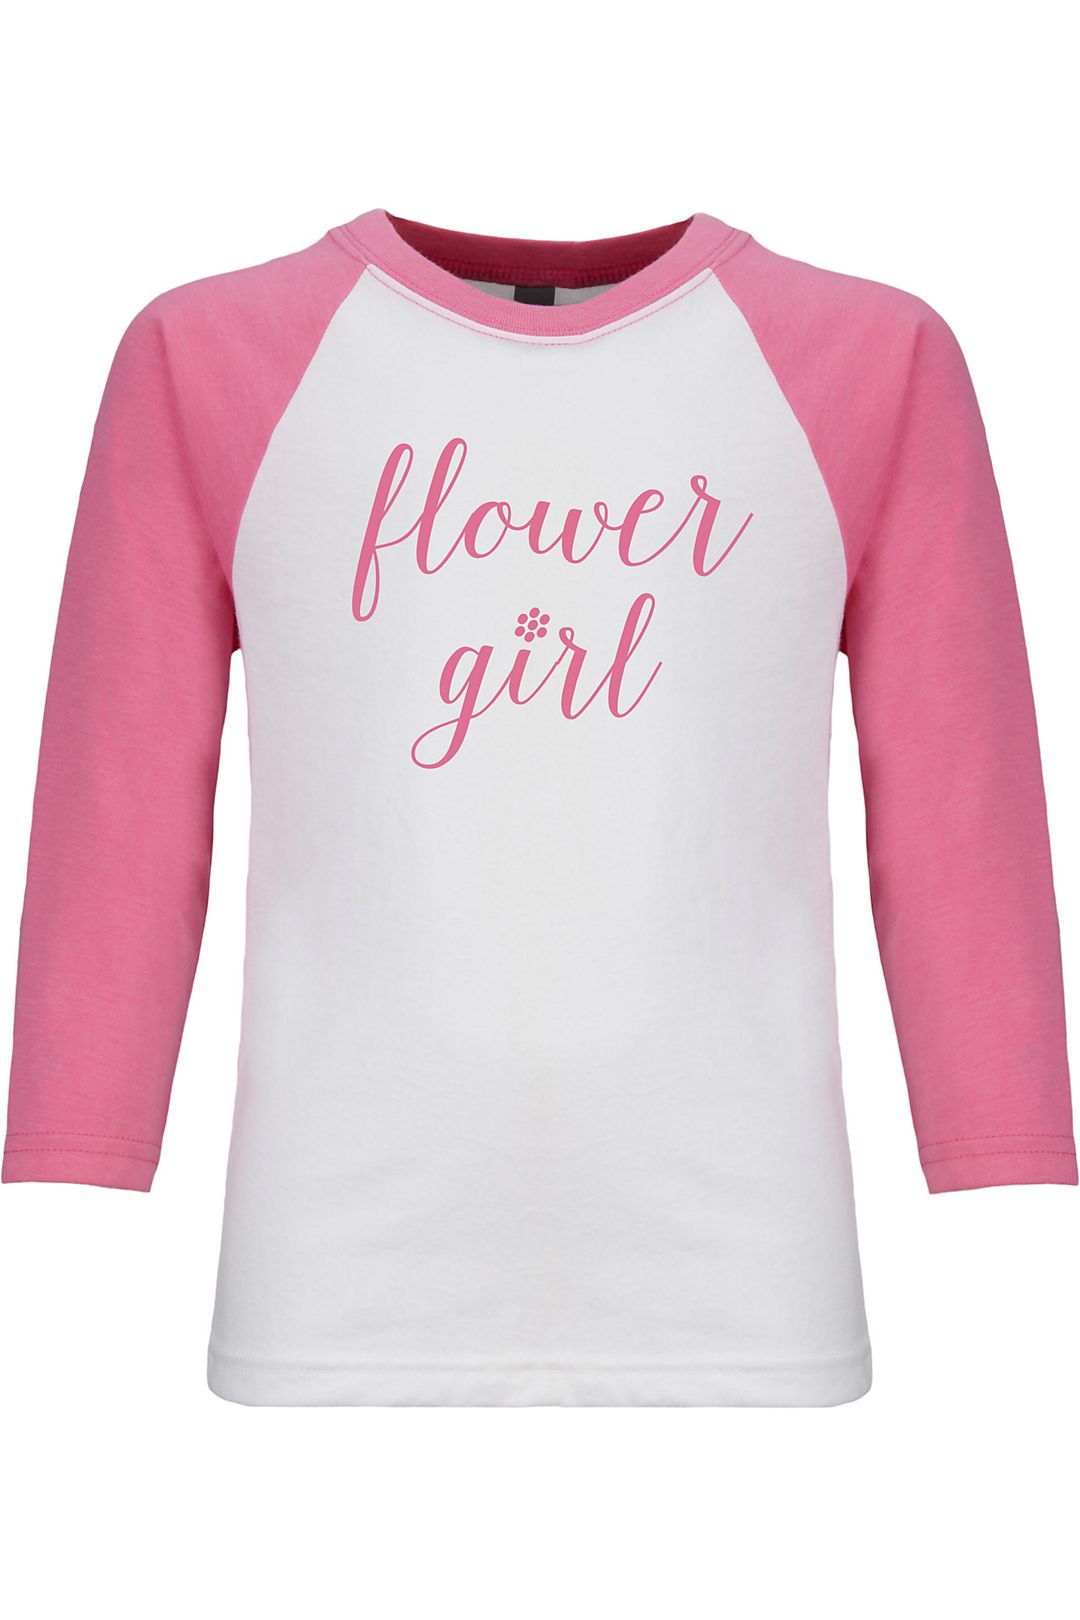 Flower Girl Outfit - Simple Flower Girl T-shirt Girls - Pink